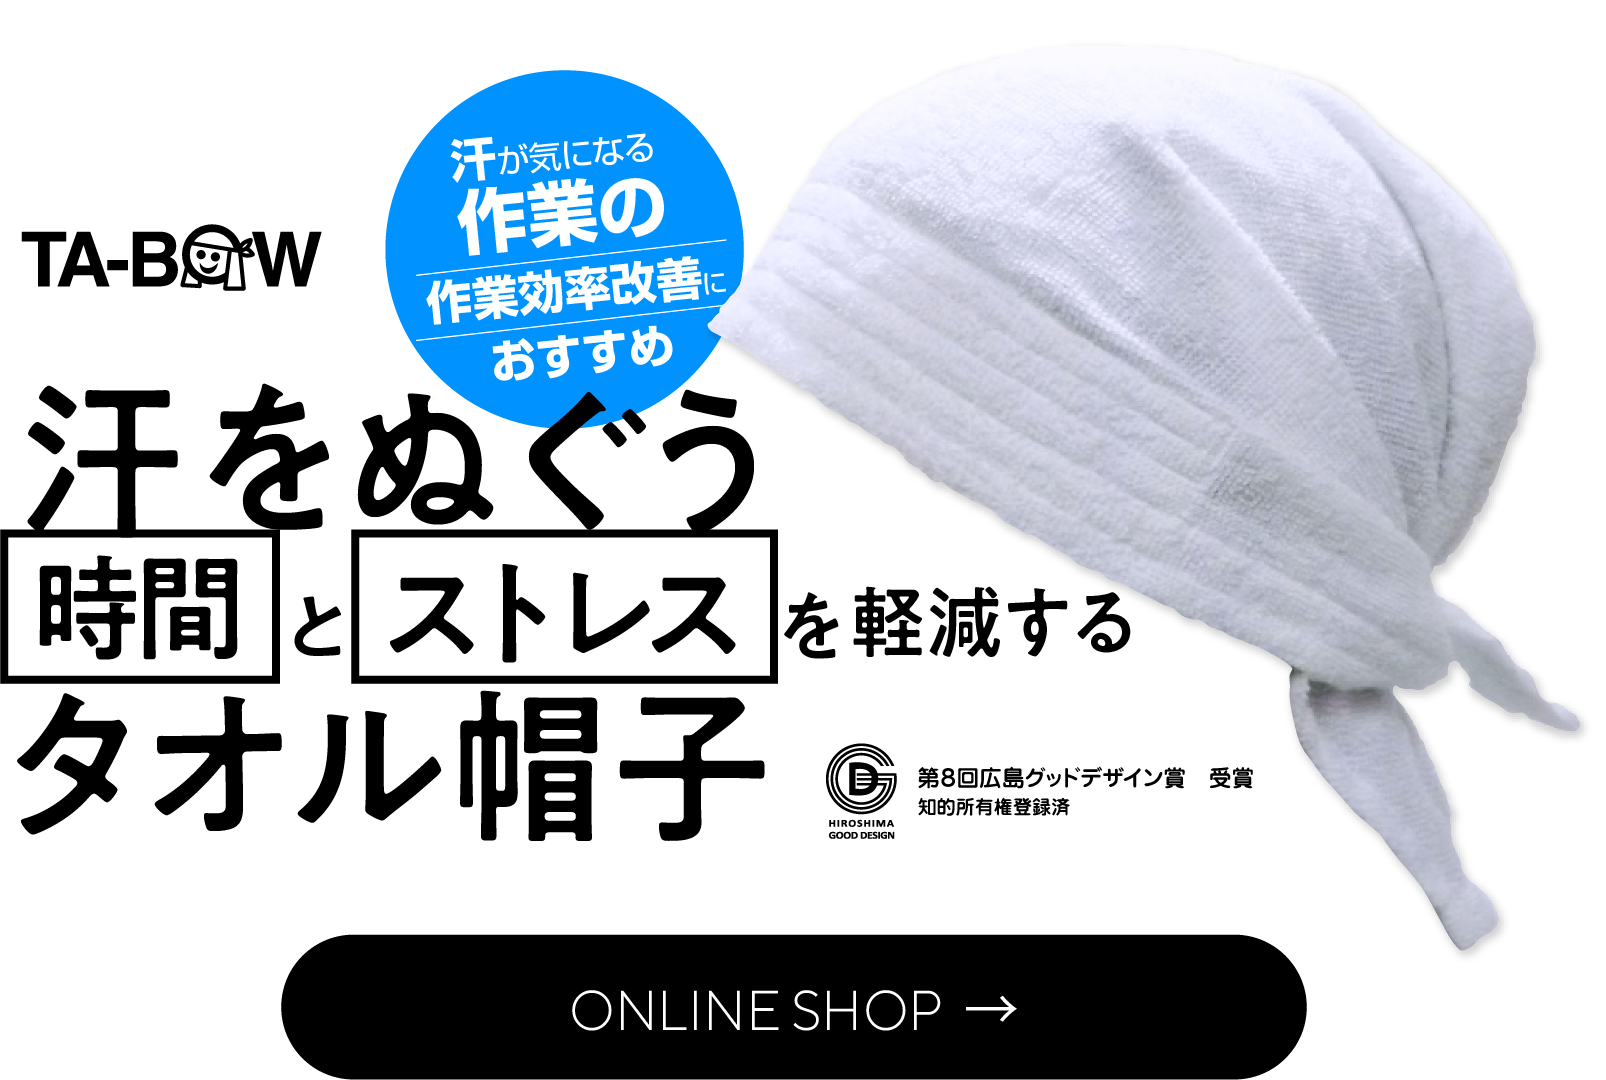 TA-BOW たーぼう - 汗をぬぐう時間とストレスを軽減するタオル帽子